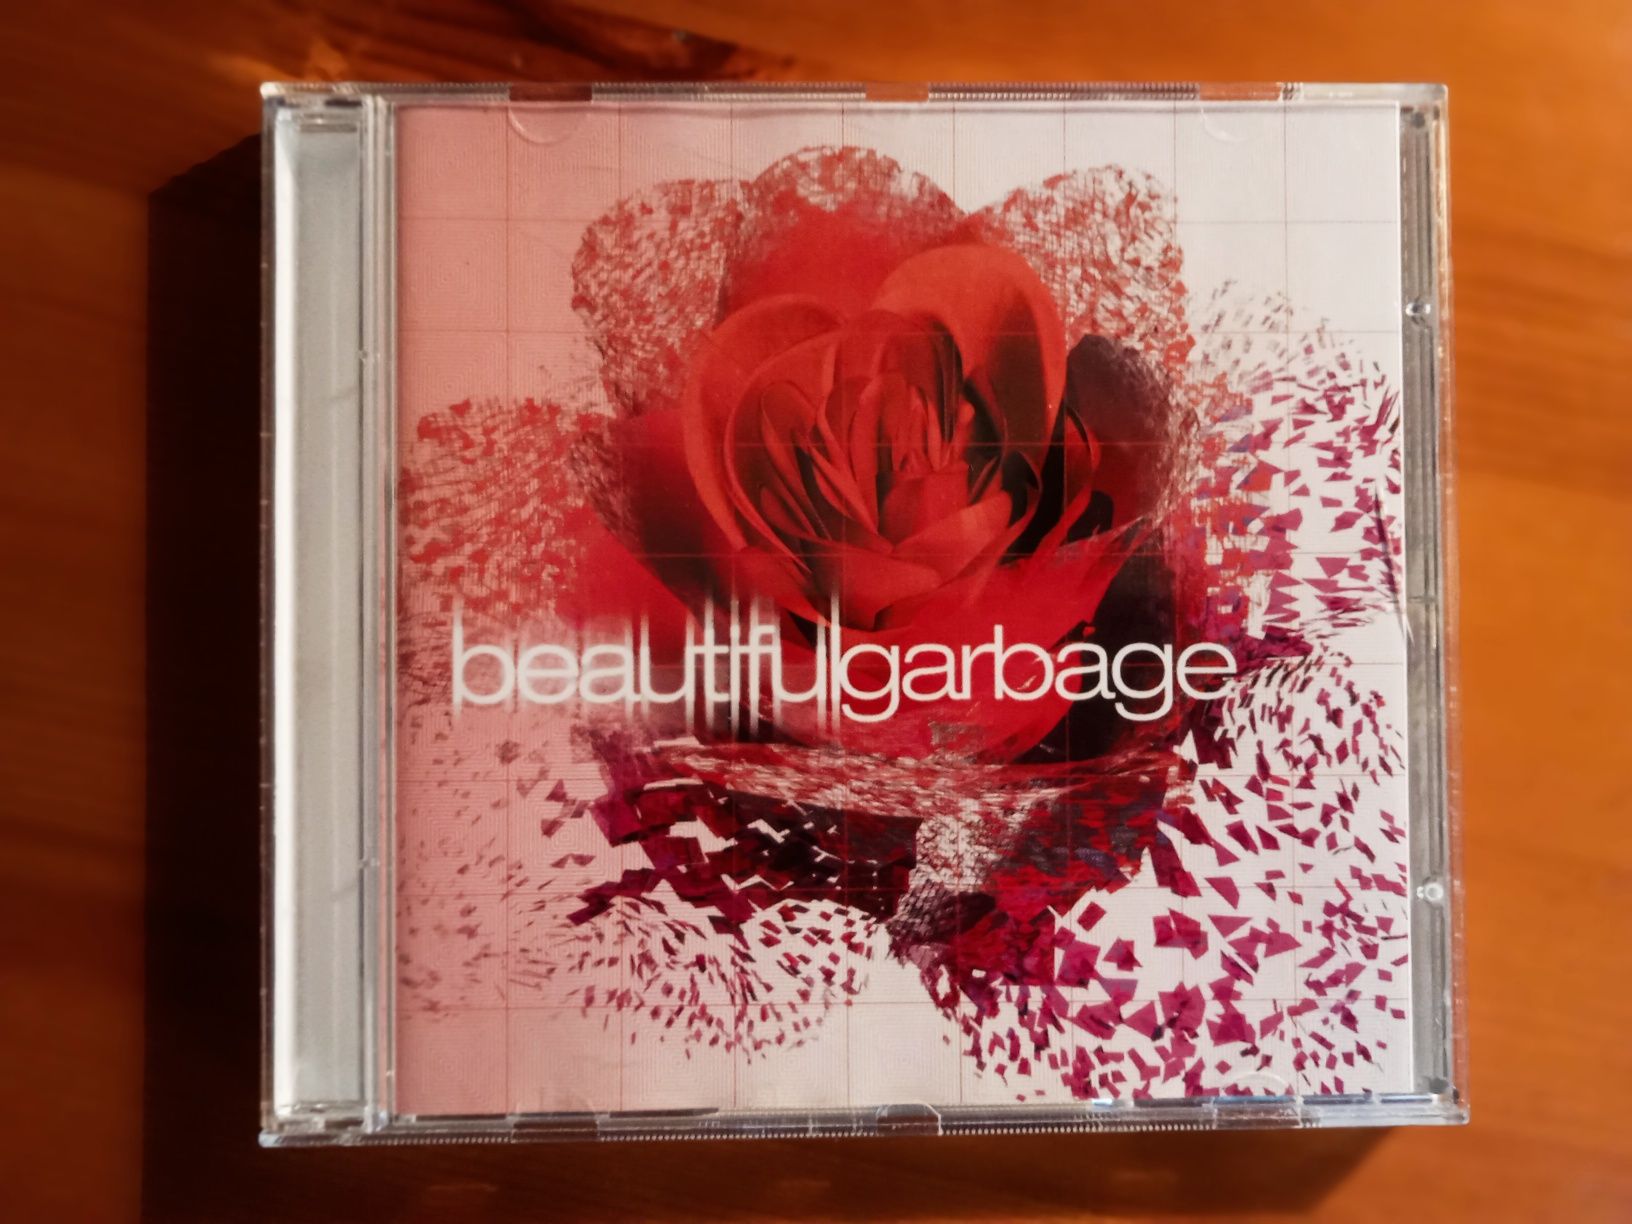 Cd Audio Garbage-Beautifugarbage,-диск